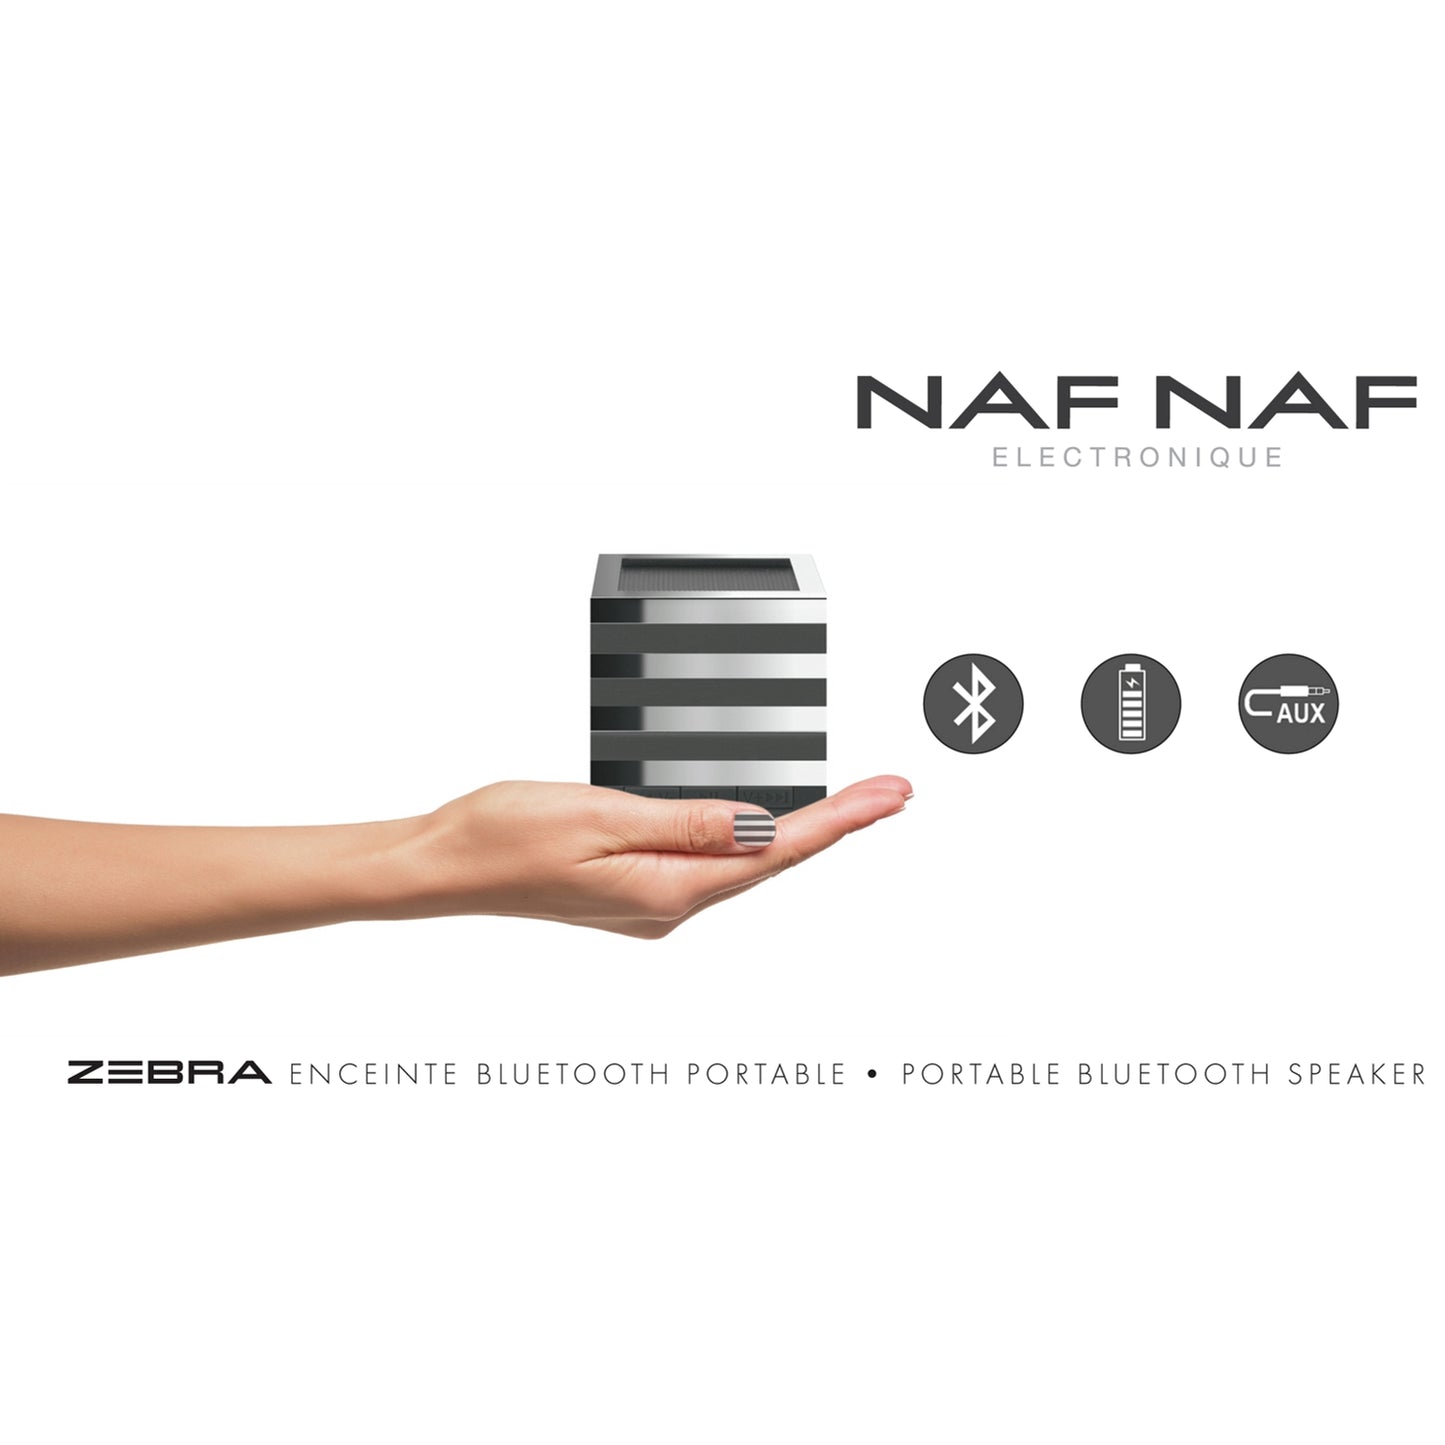 NAFNAF Zebra, tragbarer 3.0 Bluetooth Lautsprecher, 3W, bis zu 10 Meter